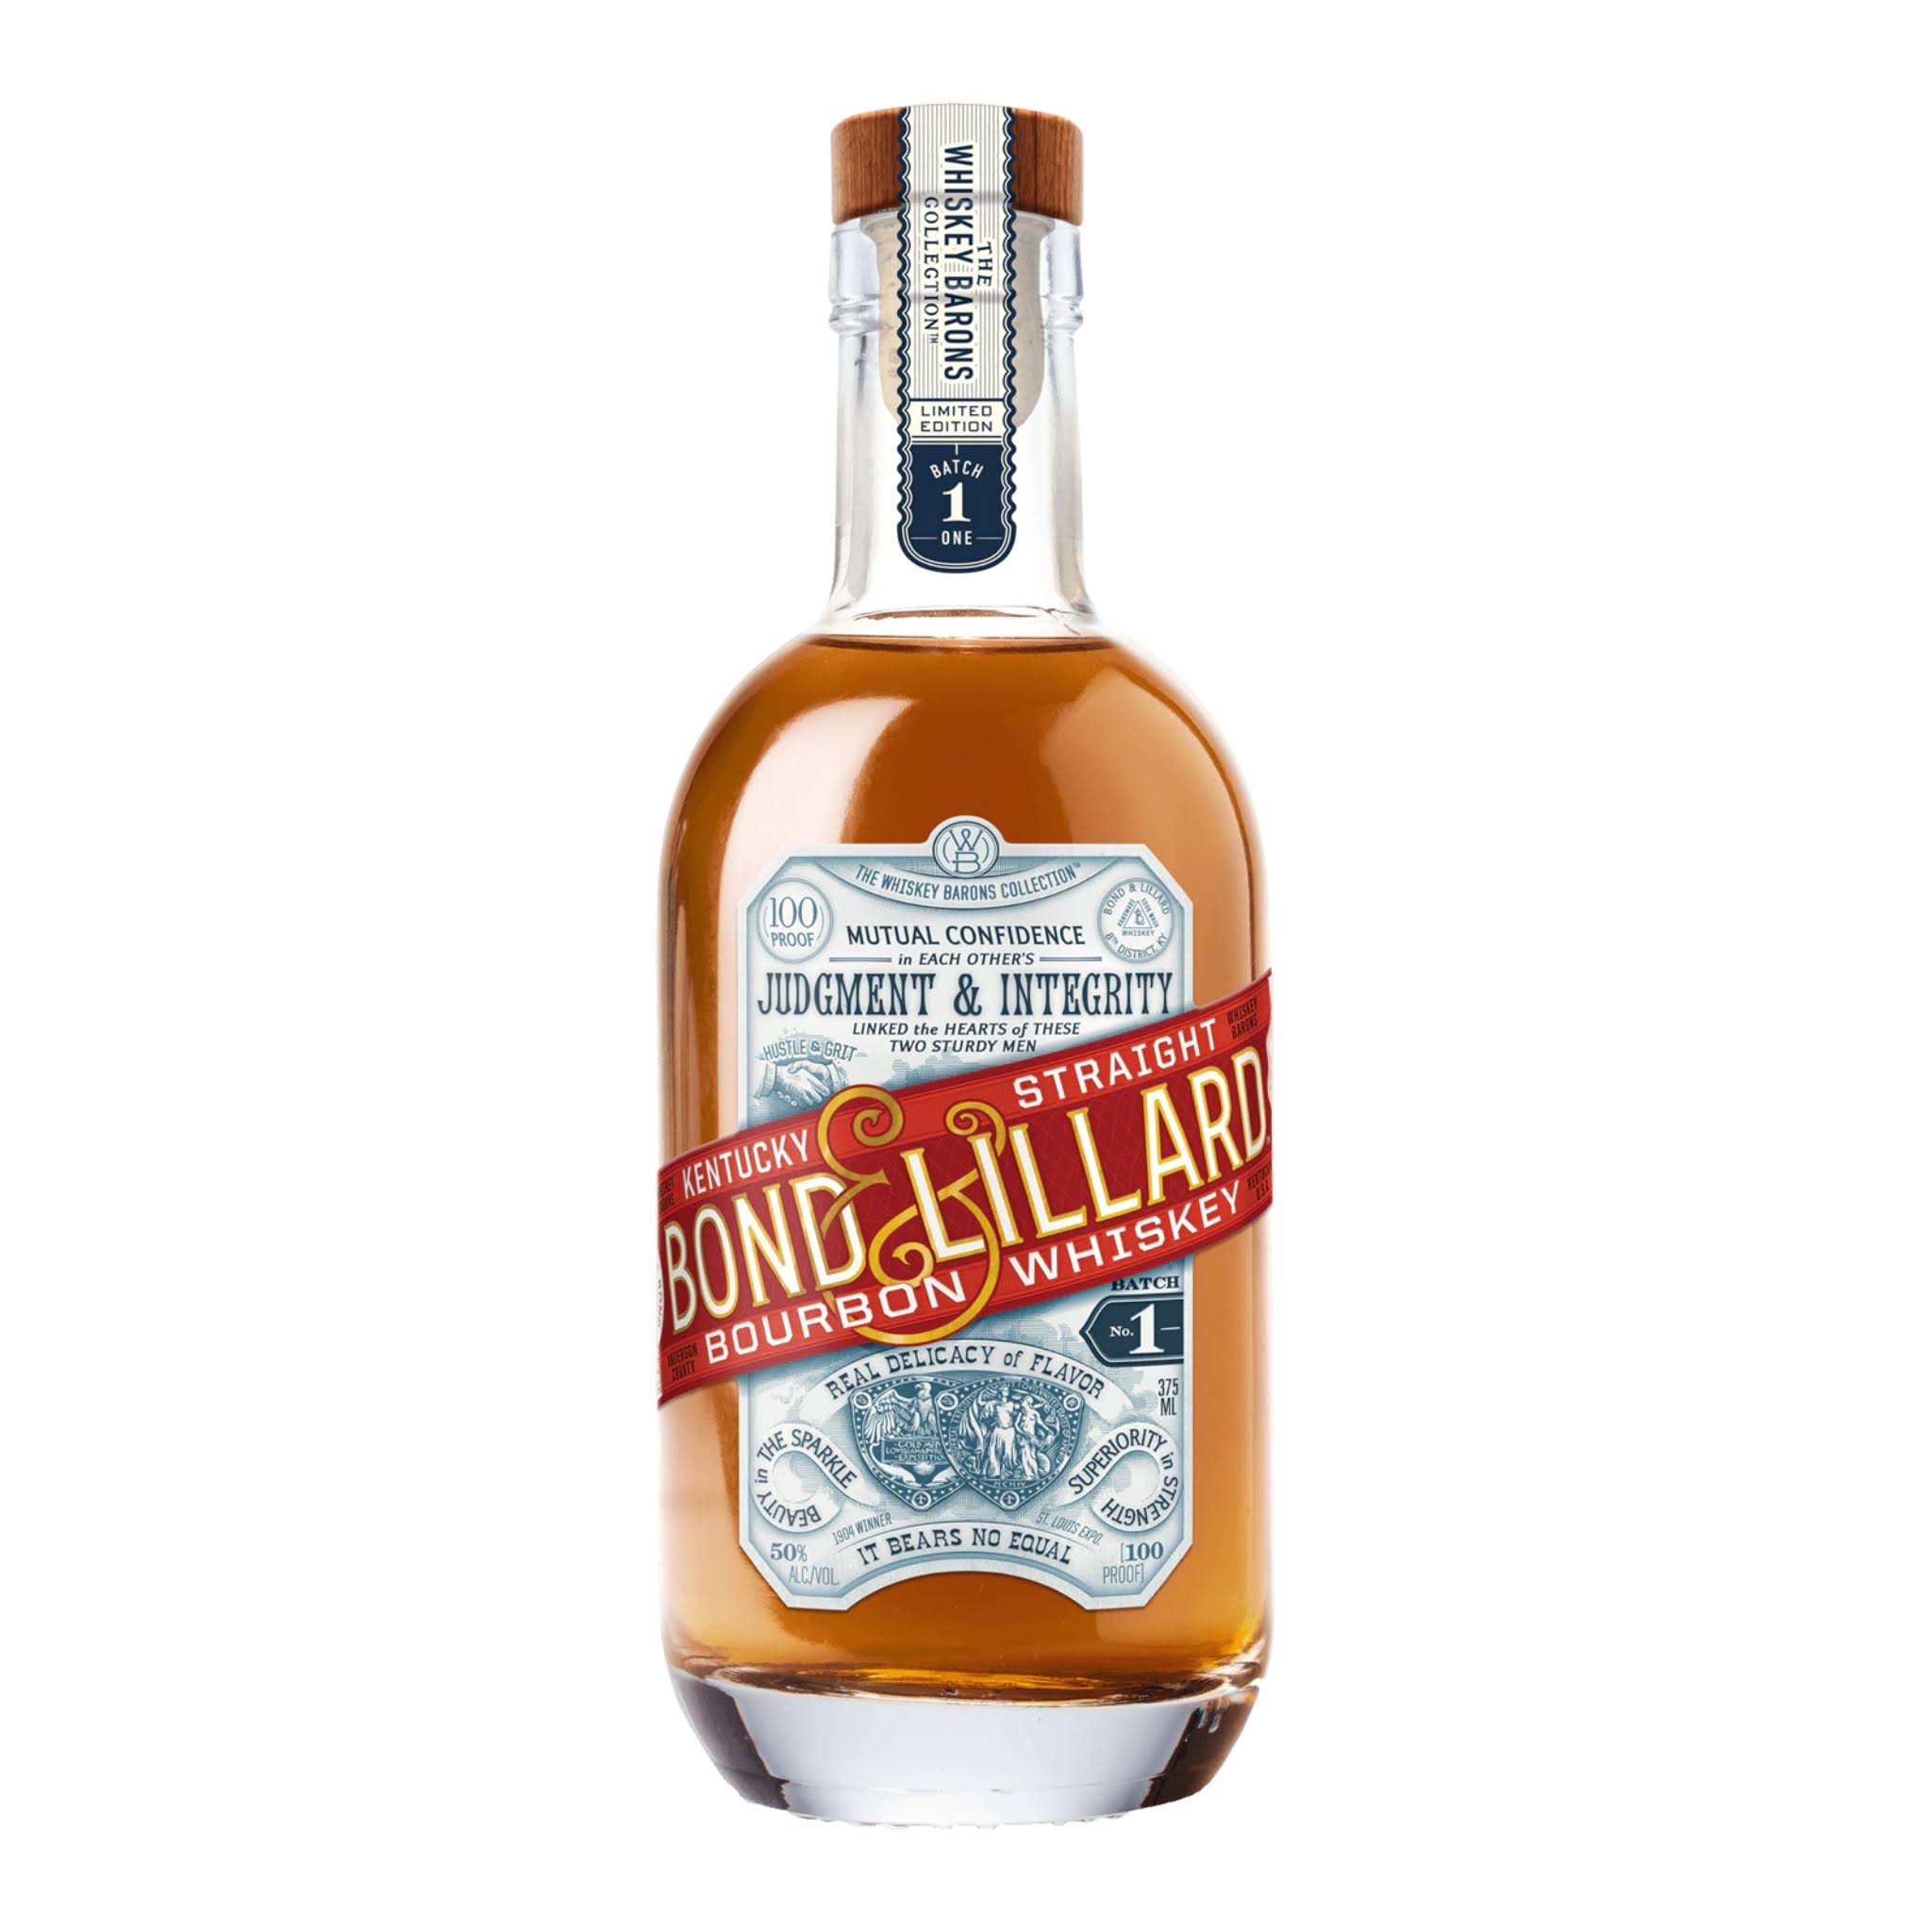 Bond and Lillard Limited Edition Bourbon by Wild Turkey 375ml